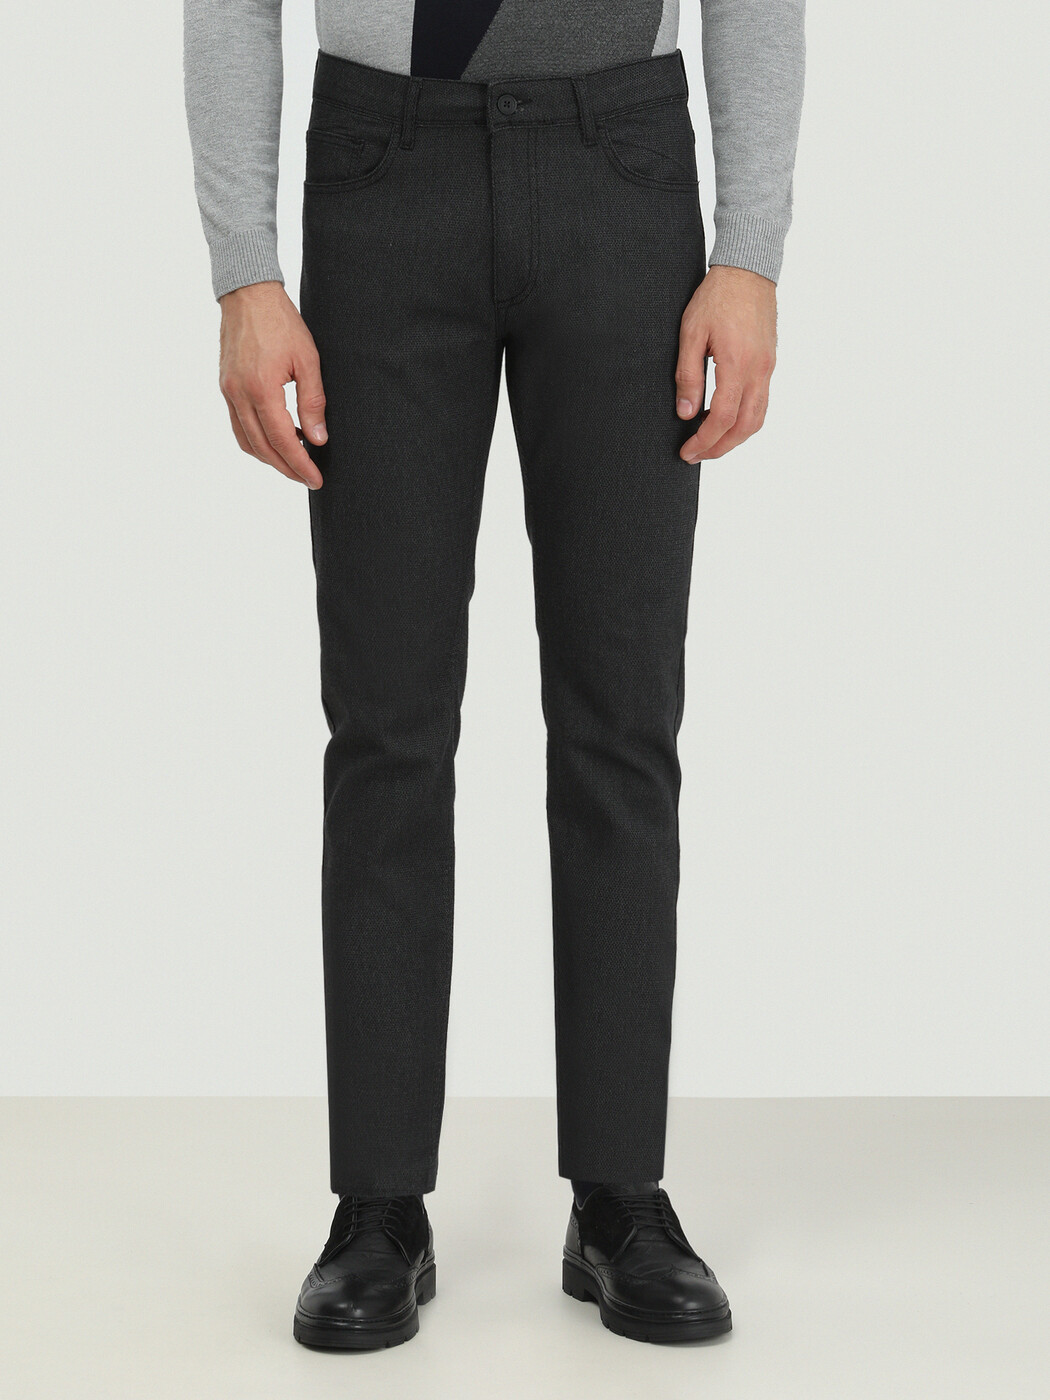 KİP - Siyah Düz Dokuma Slim Fit Casual Pamuk Karışımlı Pantolon (1)